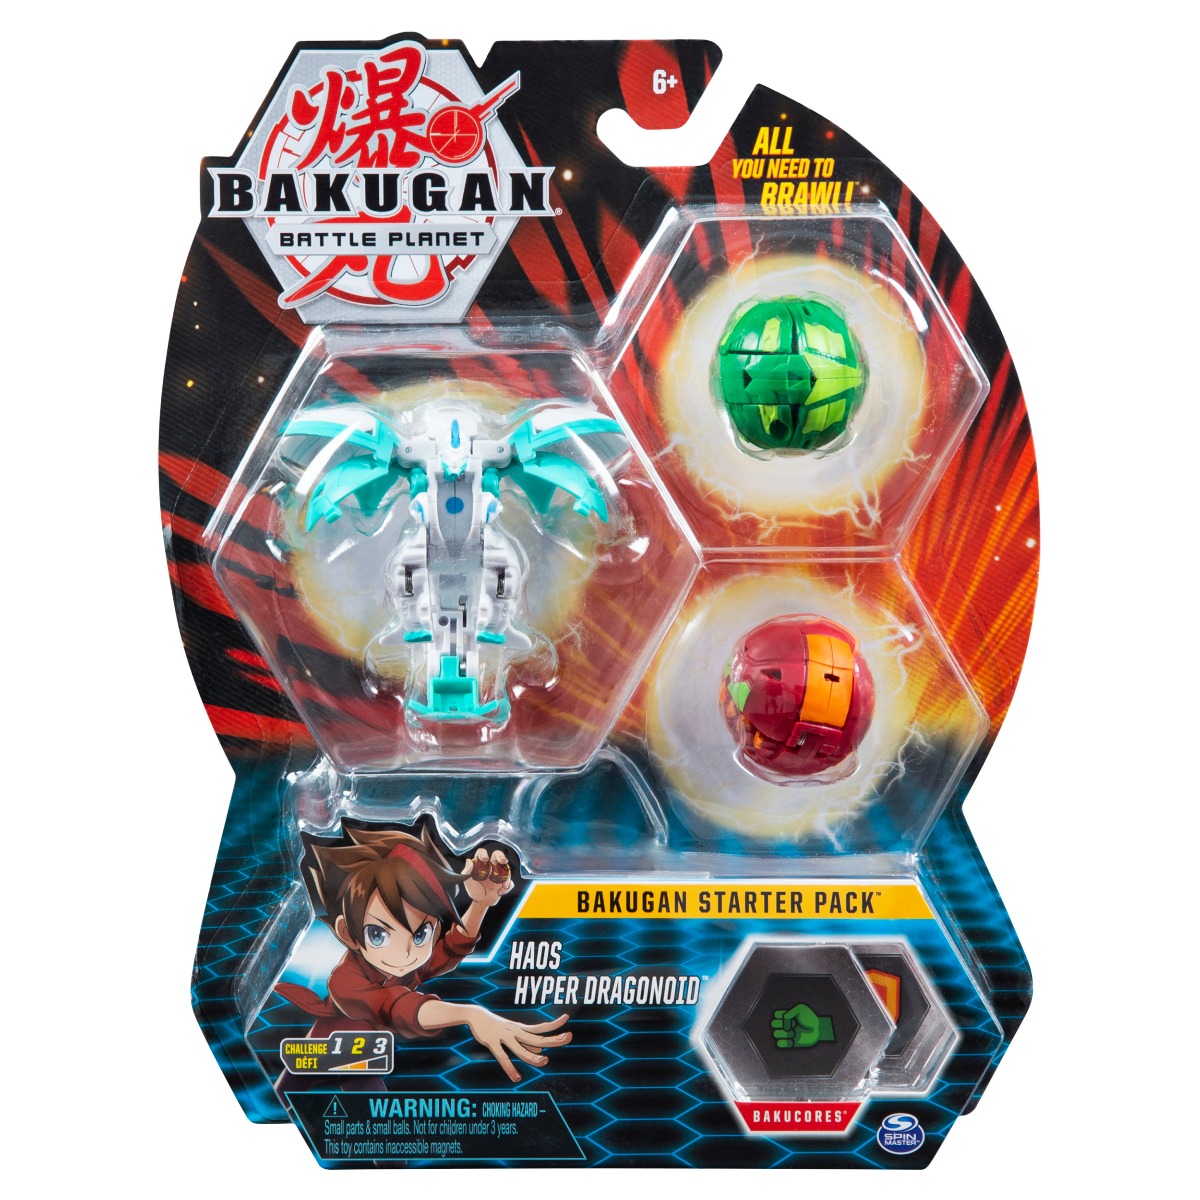 Set Bakugan Battle Planet Starter Pack, Haos Hyper Dragonoid, 20118470